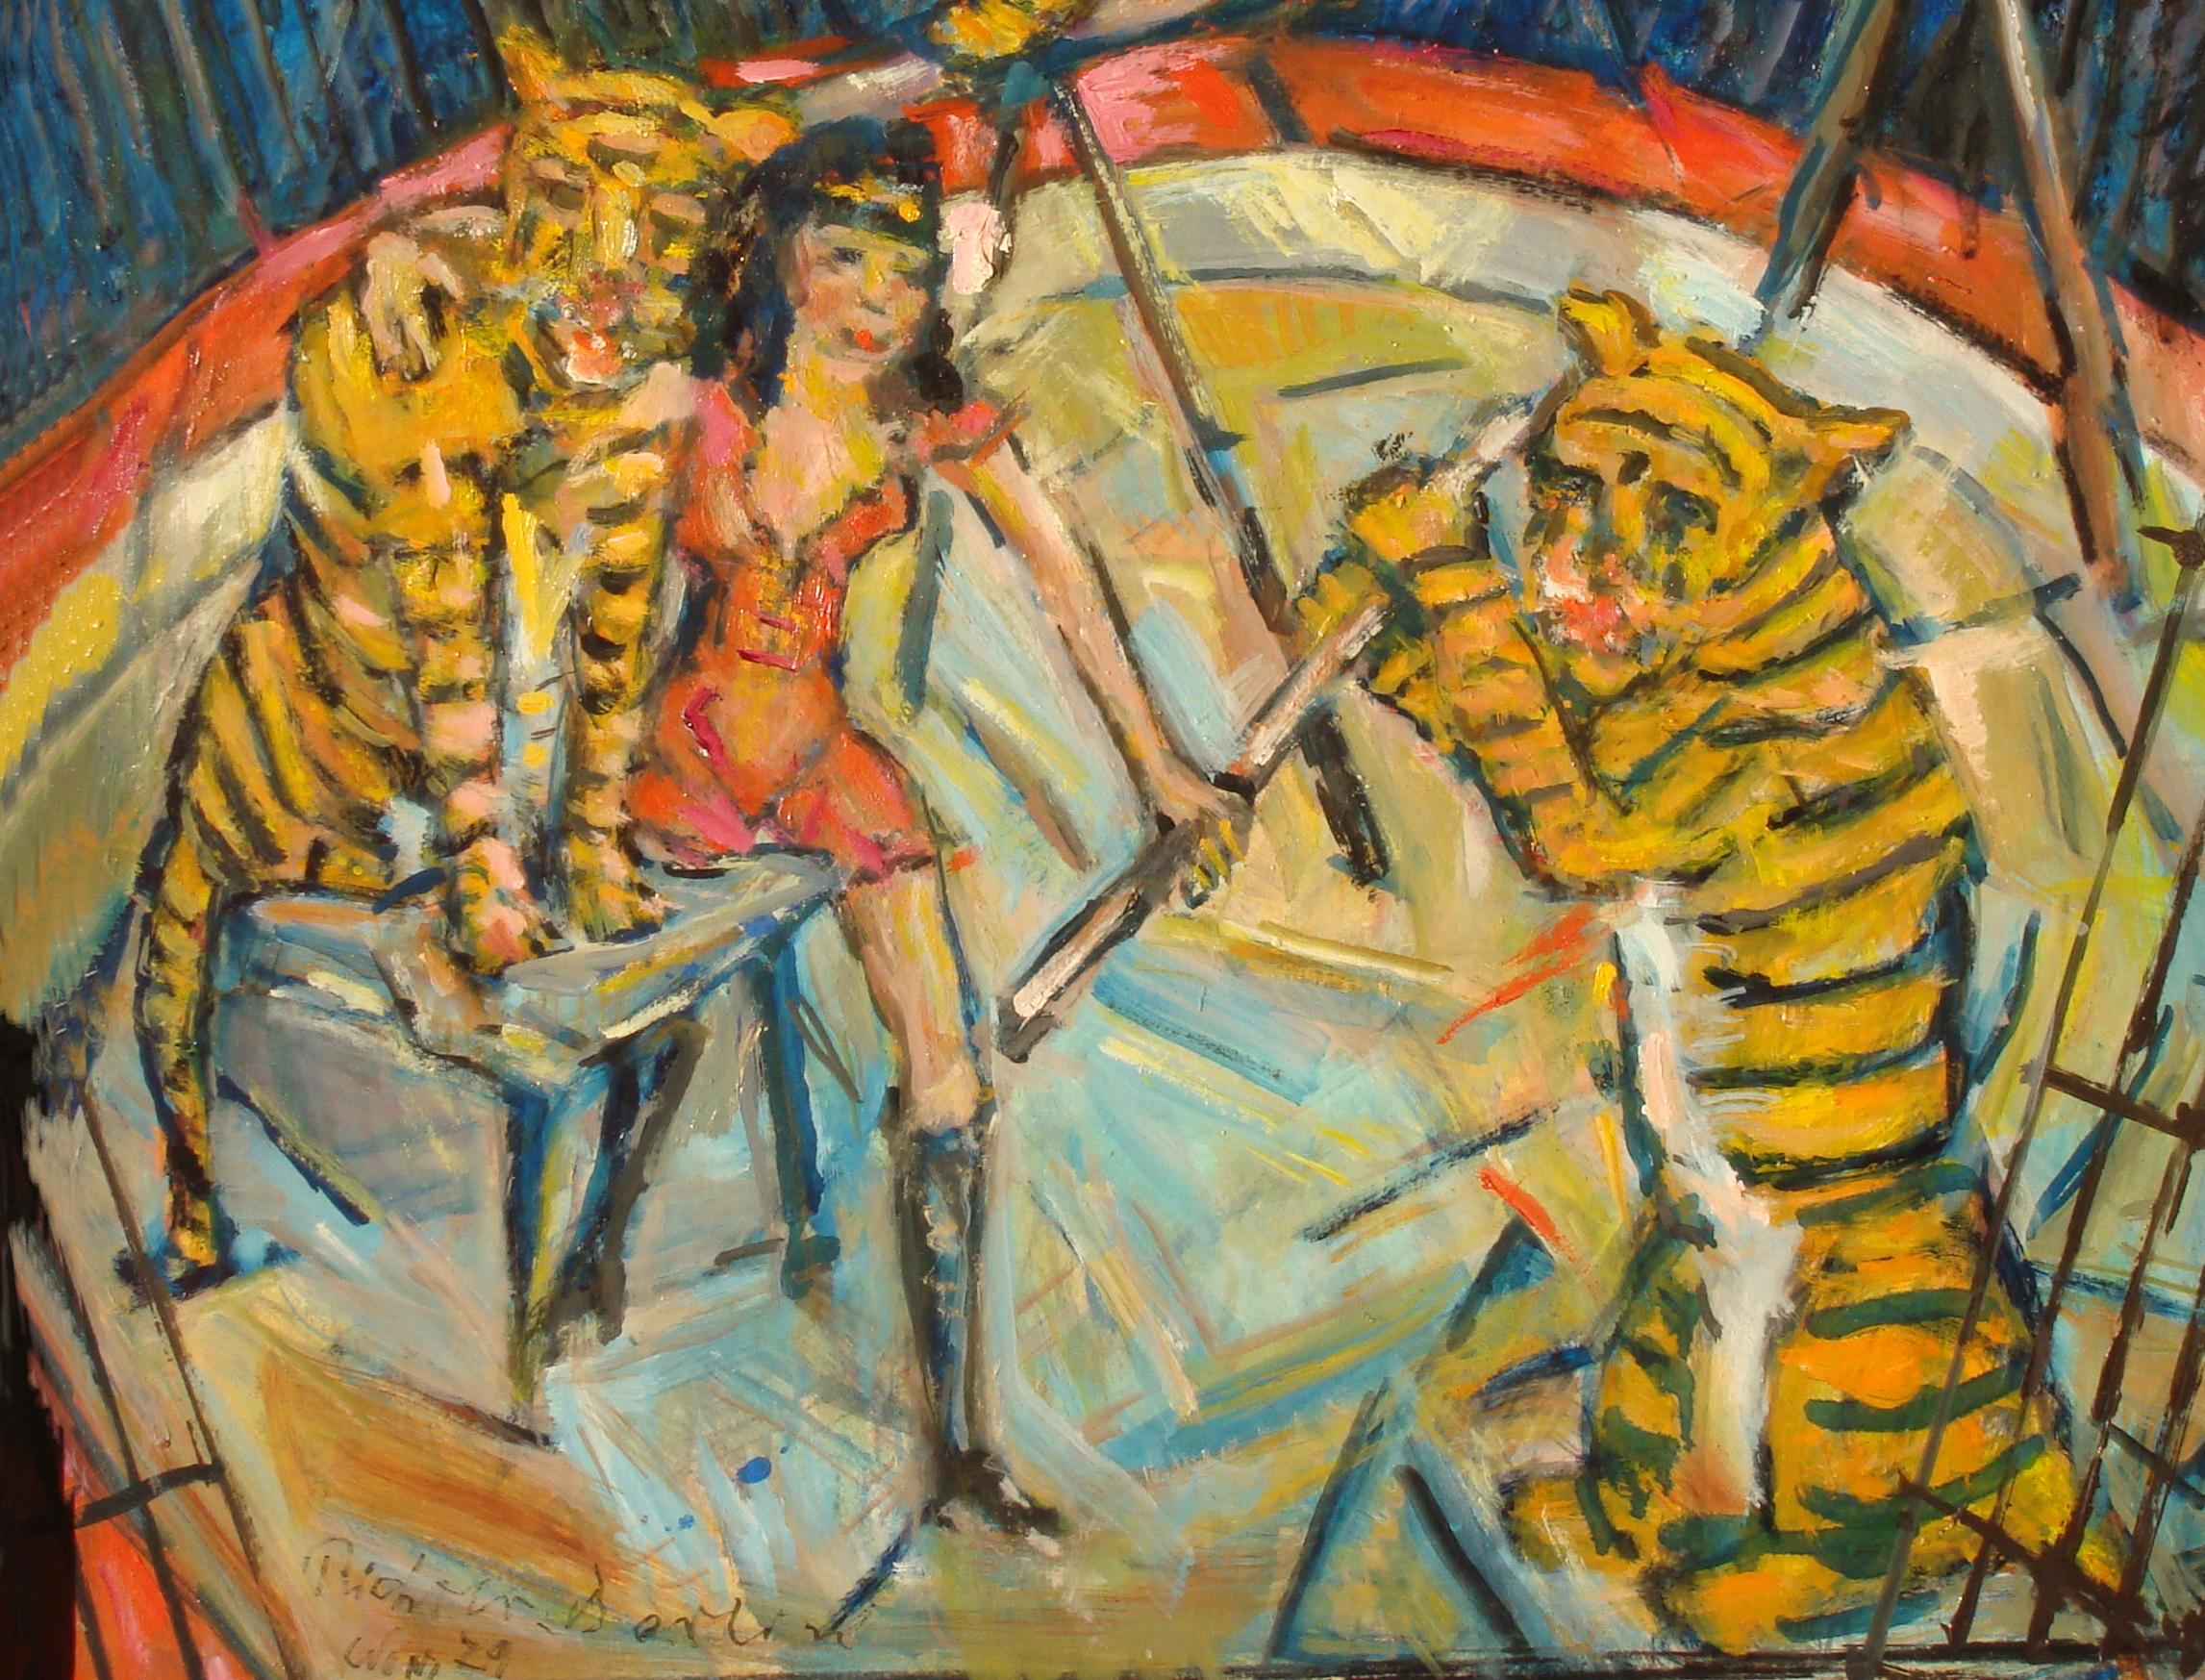 Heinrich Richter-Berlin Oil Painting Tiger Training, 1979 - Brown Animal Painting by Heinrich Richter (b.1884)